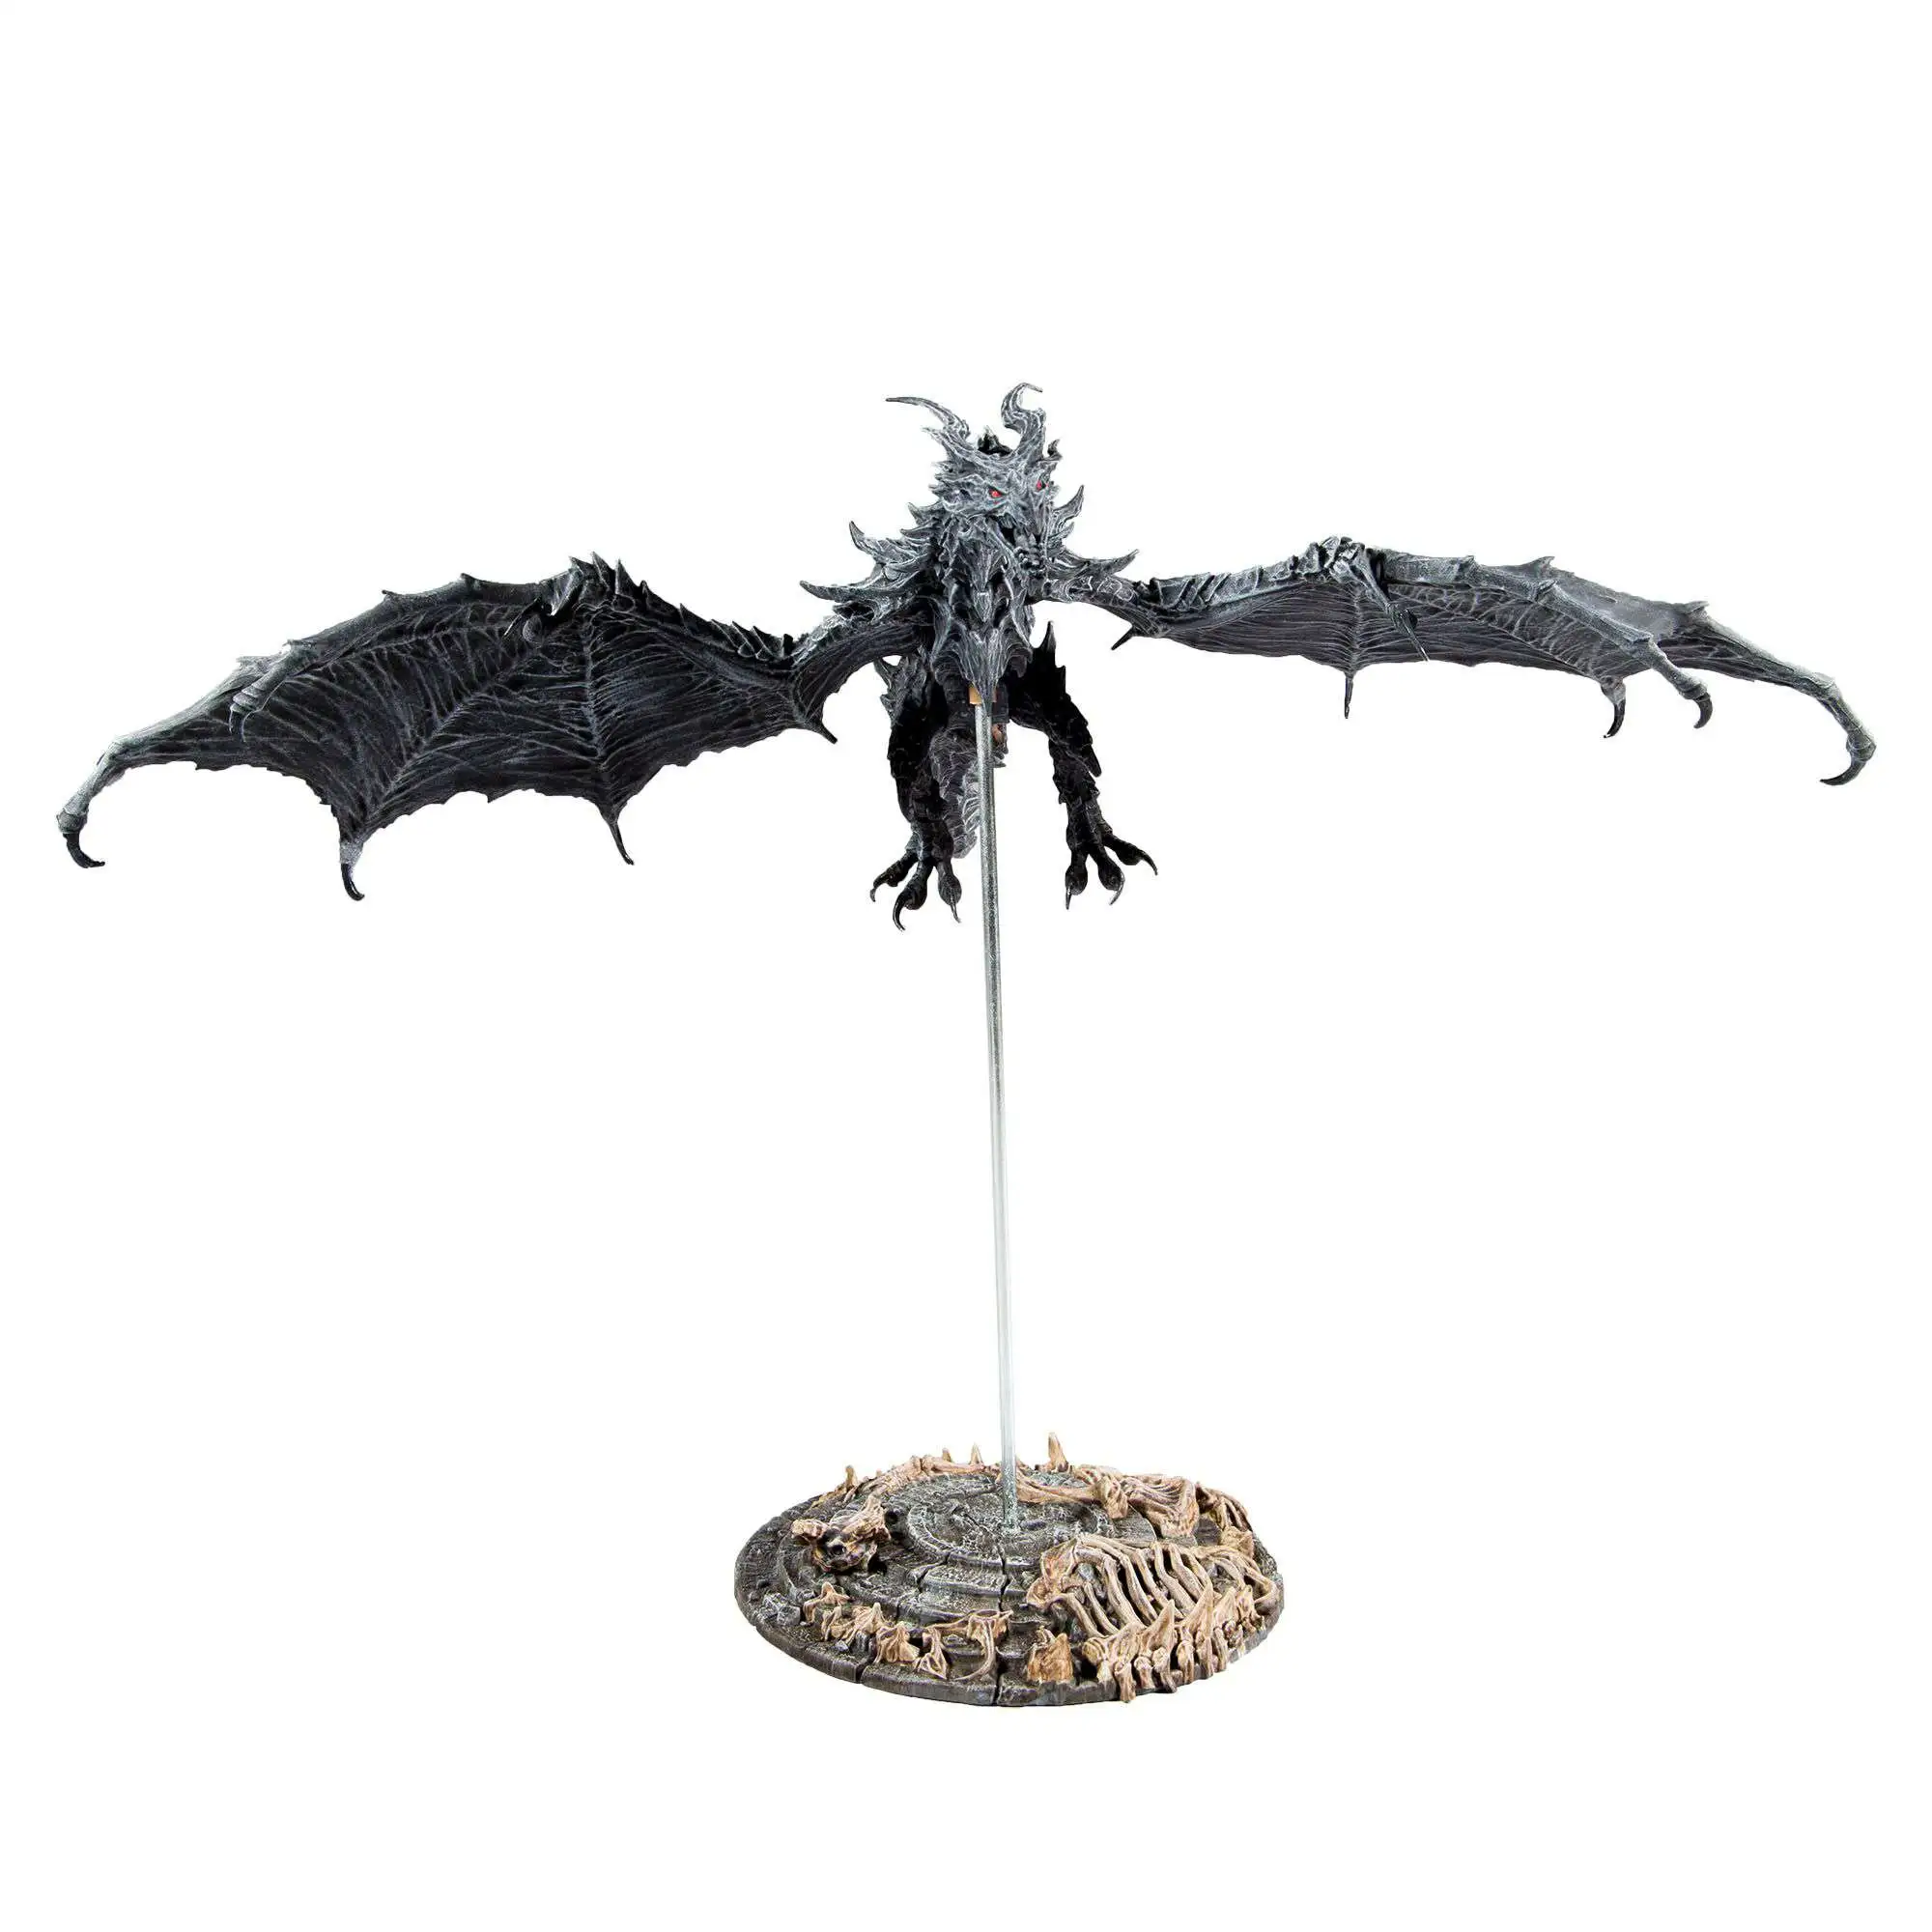 Elder Scrolls Alduin Le World Eater Dragon Action figure Deluxe Box 